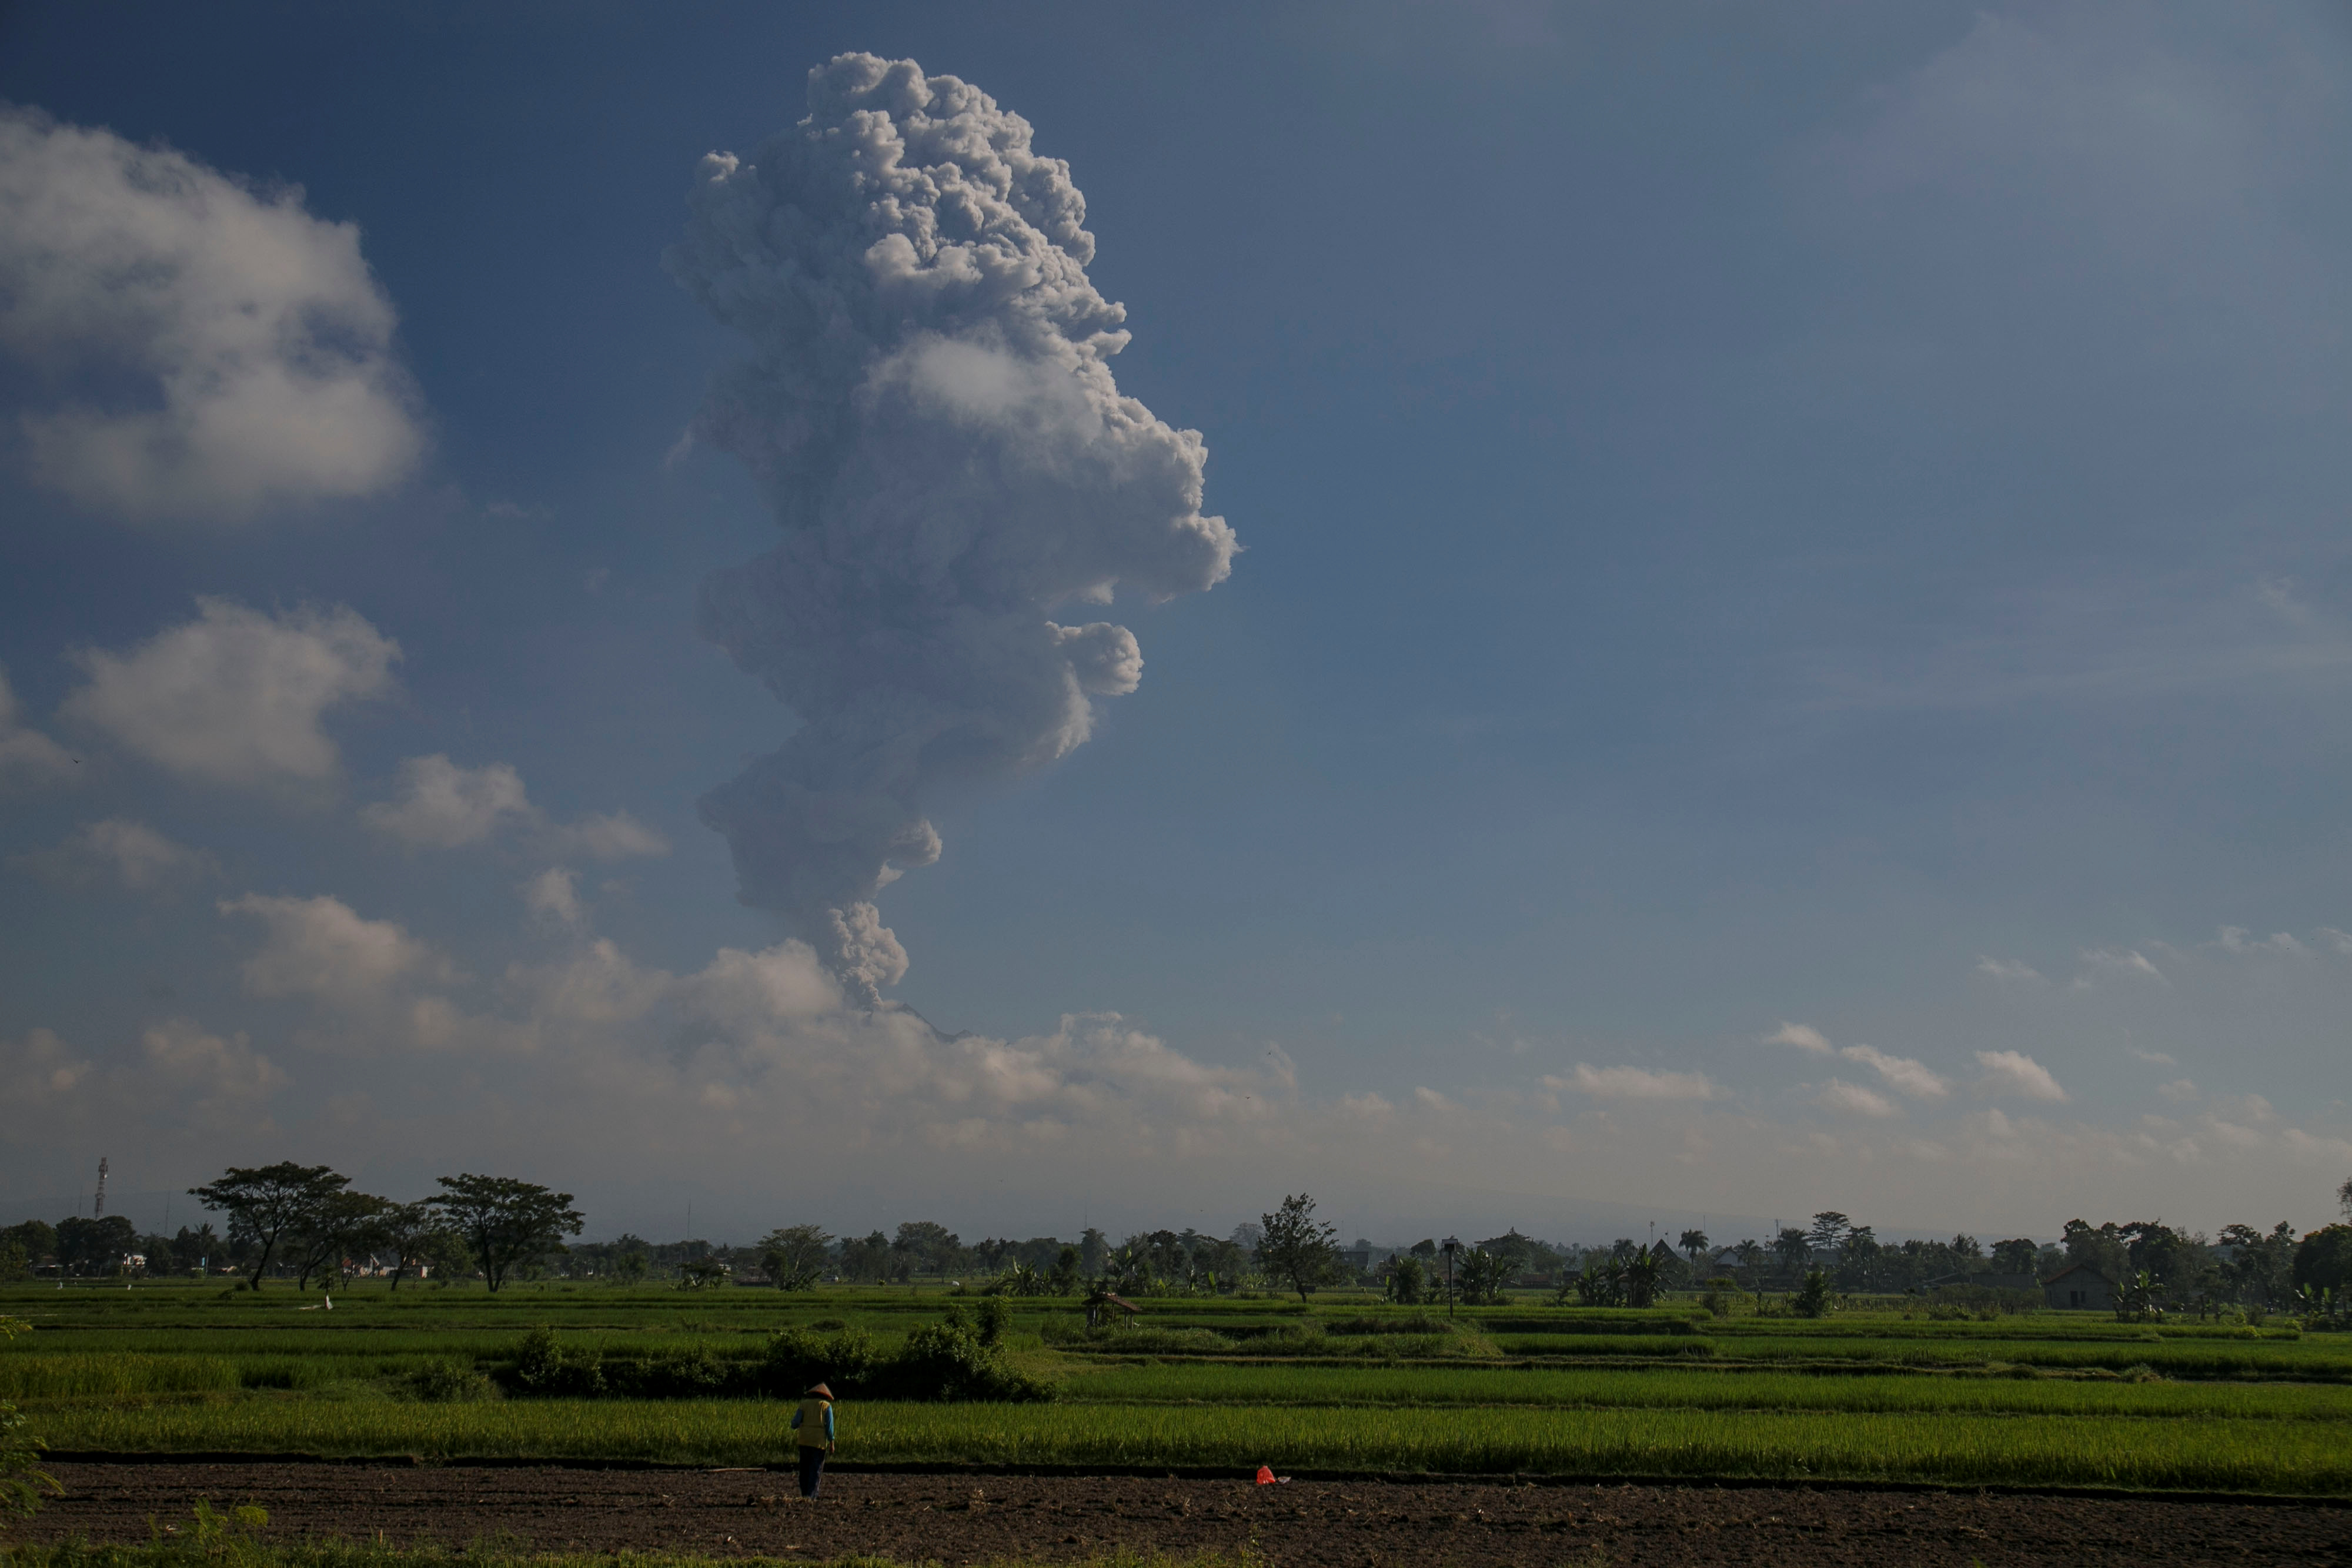 صور انبعاث دخان من بركان فى اندونيسيا (2)